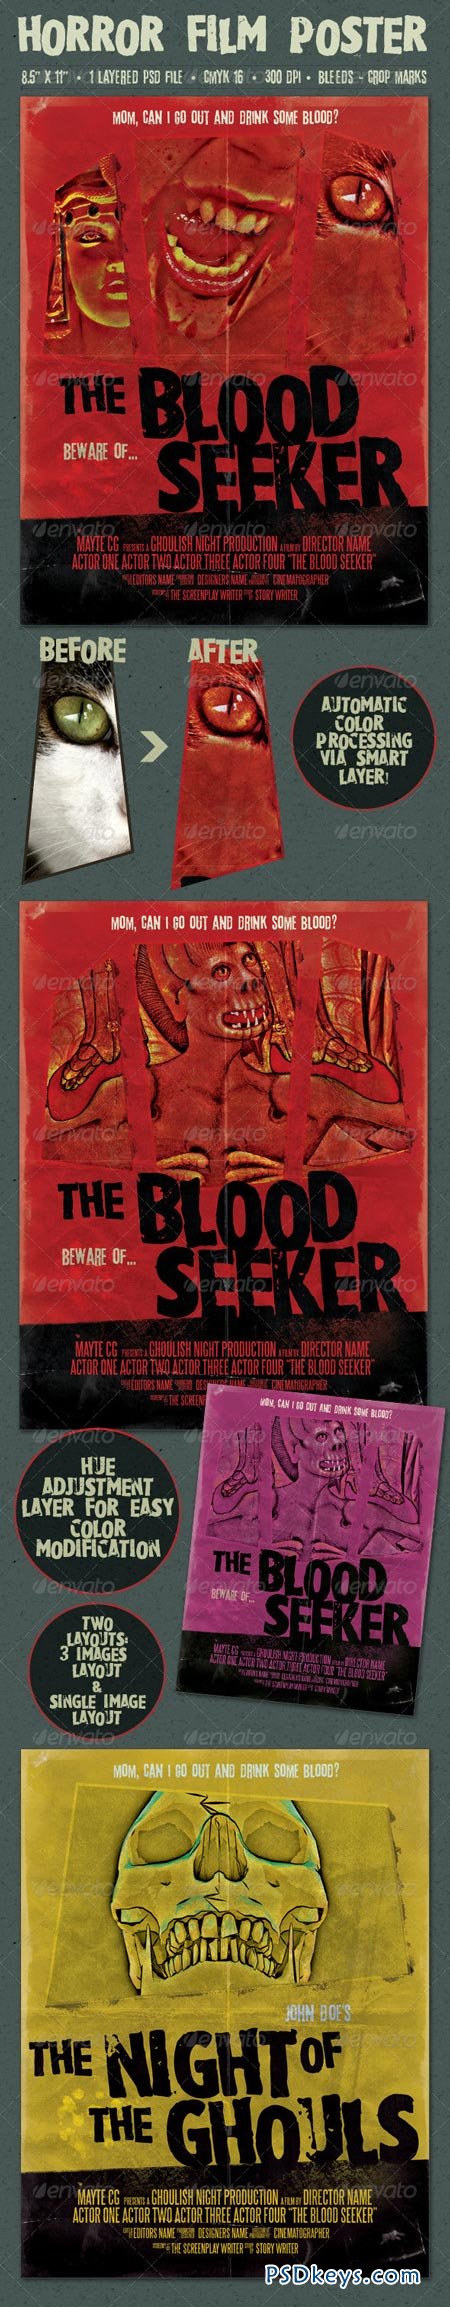 The Blood Seeker Vintage Style Horror Film Poster 6927269